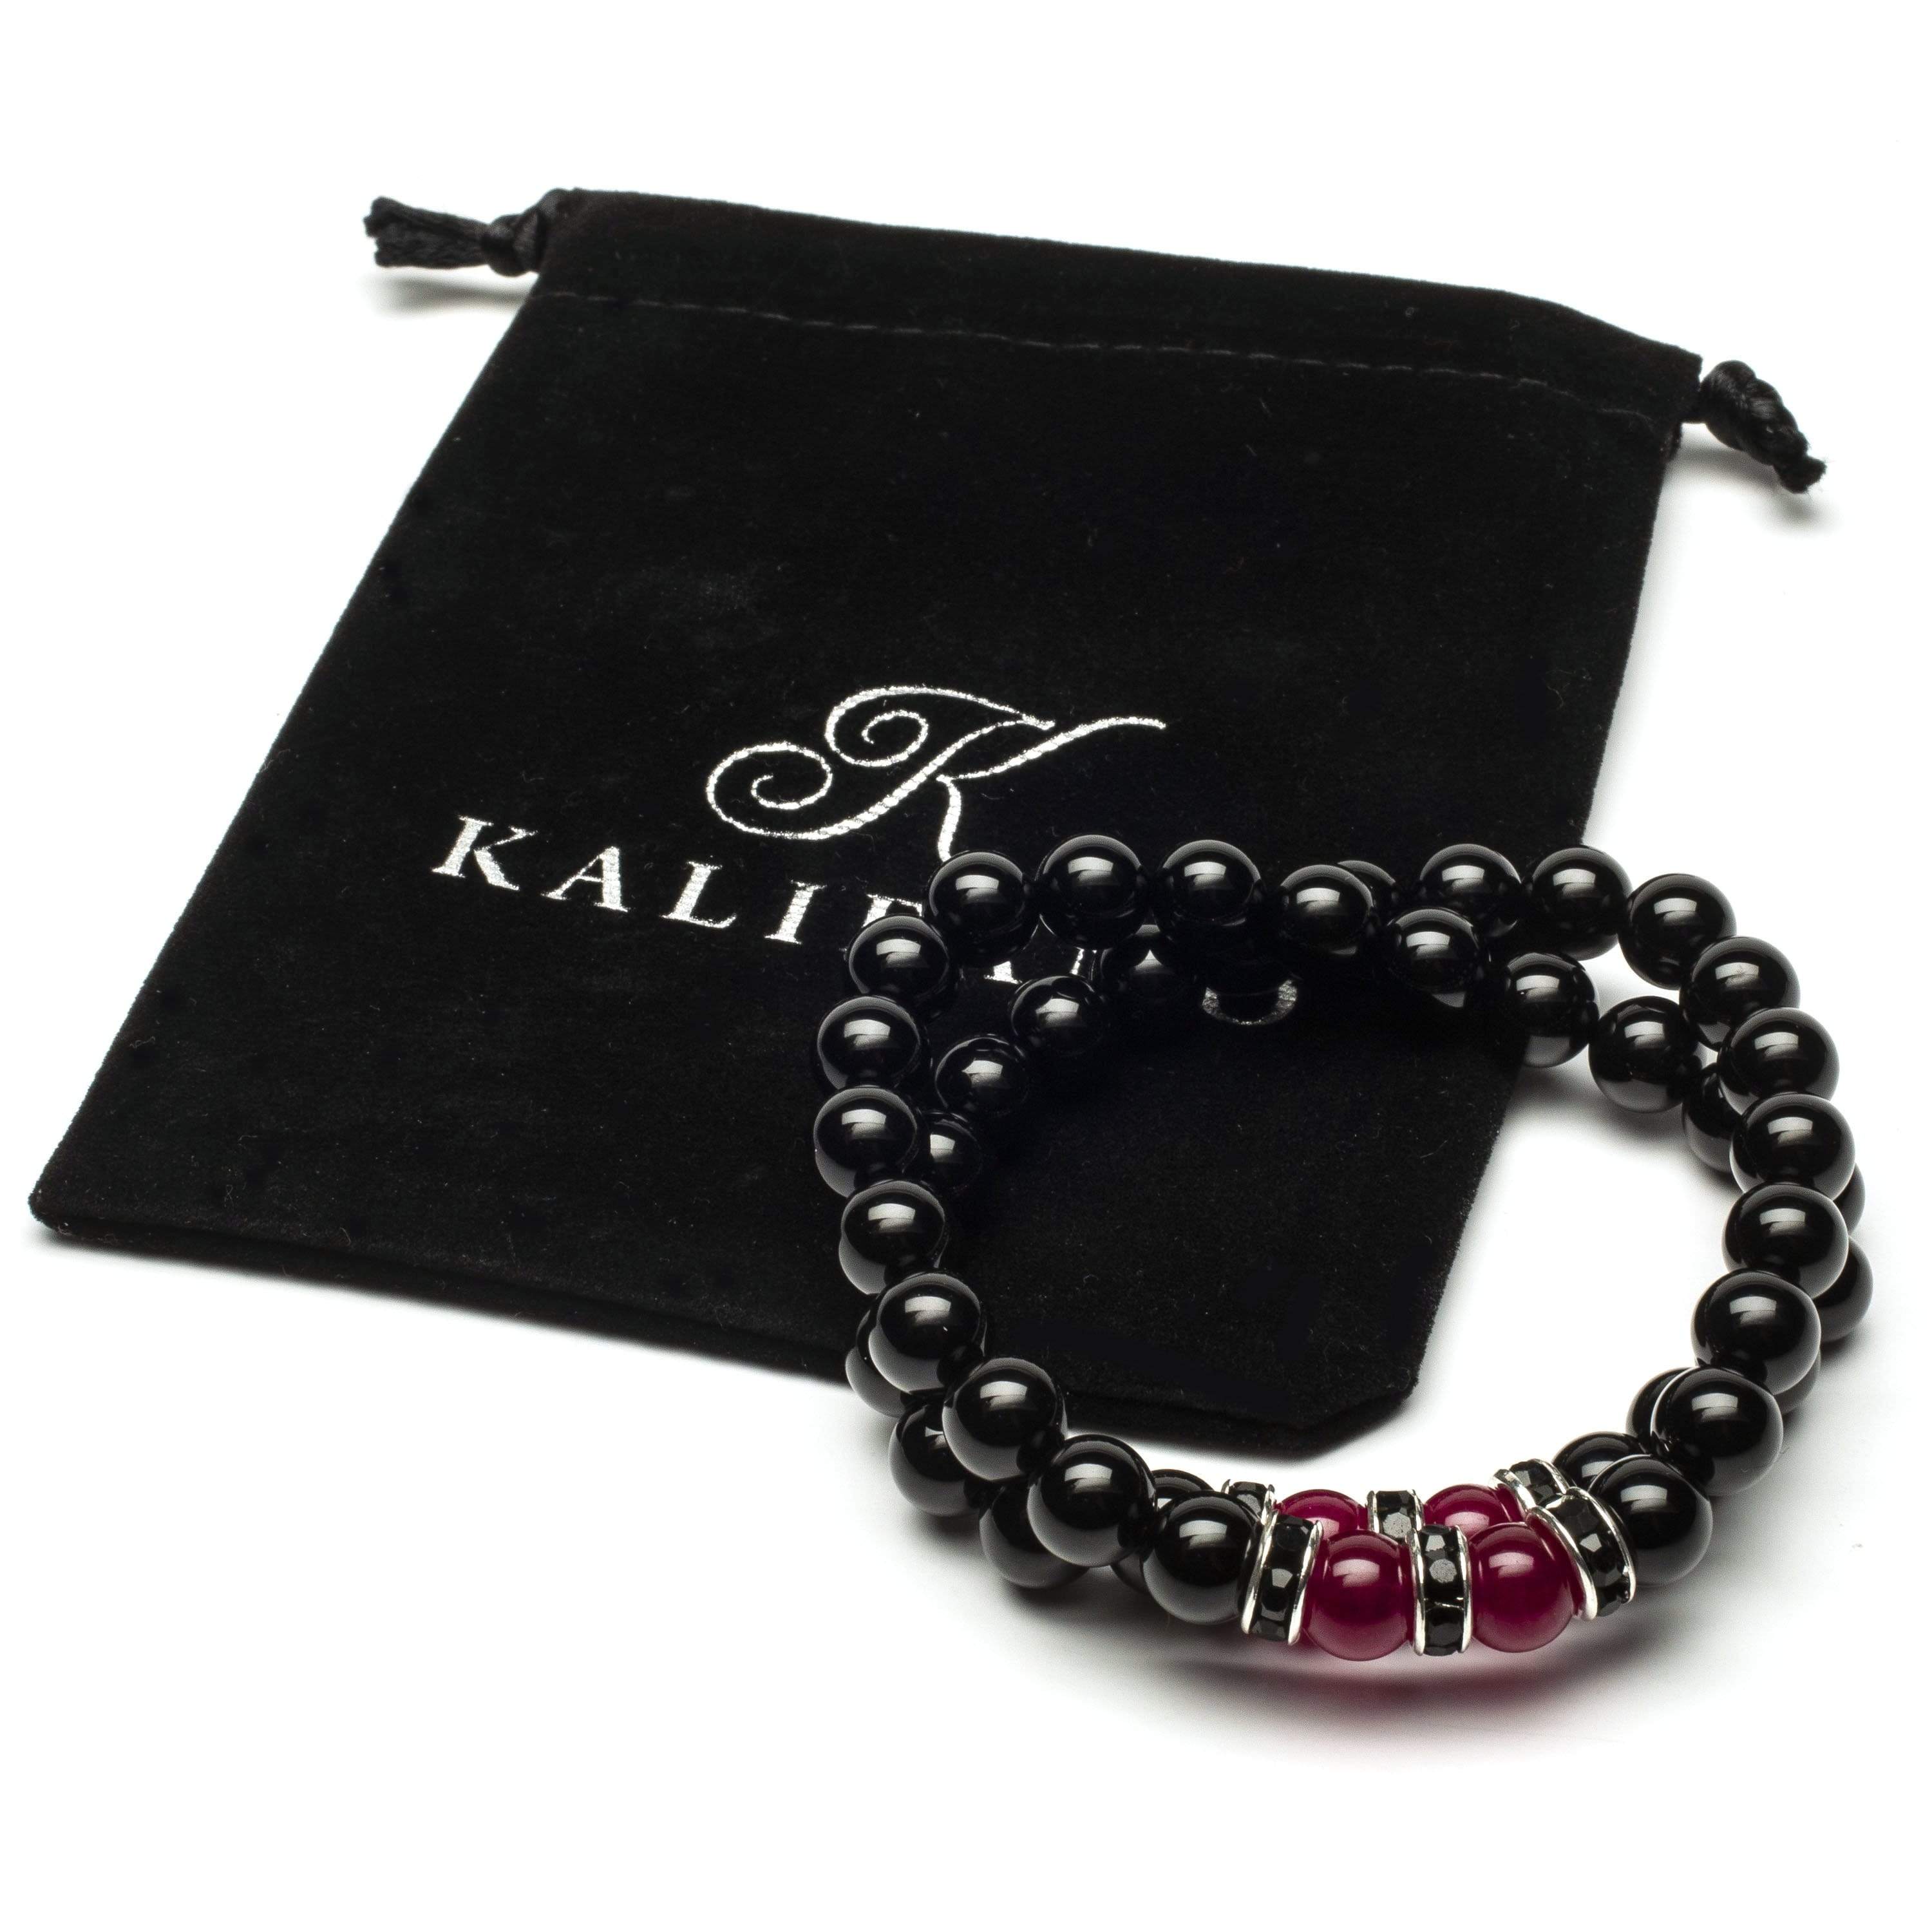 Kalifano Gemstone Bracelets Black Agate 8mm Beads with Fuchsia Agate and Black & Silver Accent Beads Double Wrap Elastic Gemstone Bracelet WHITE-BGI2-005